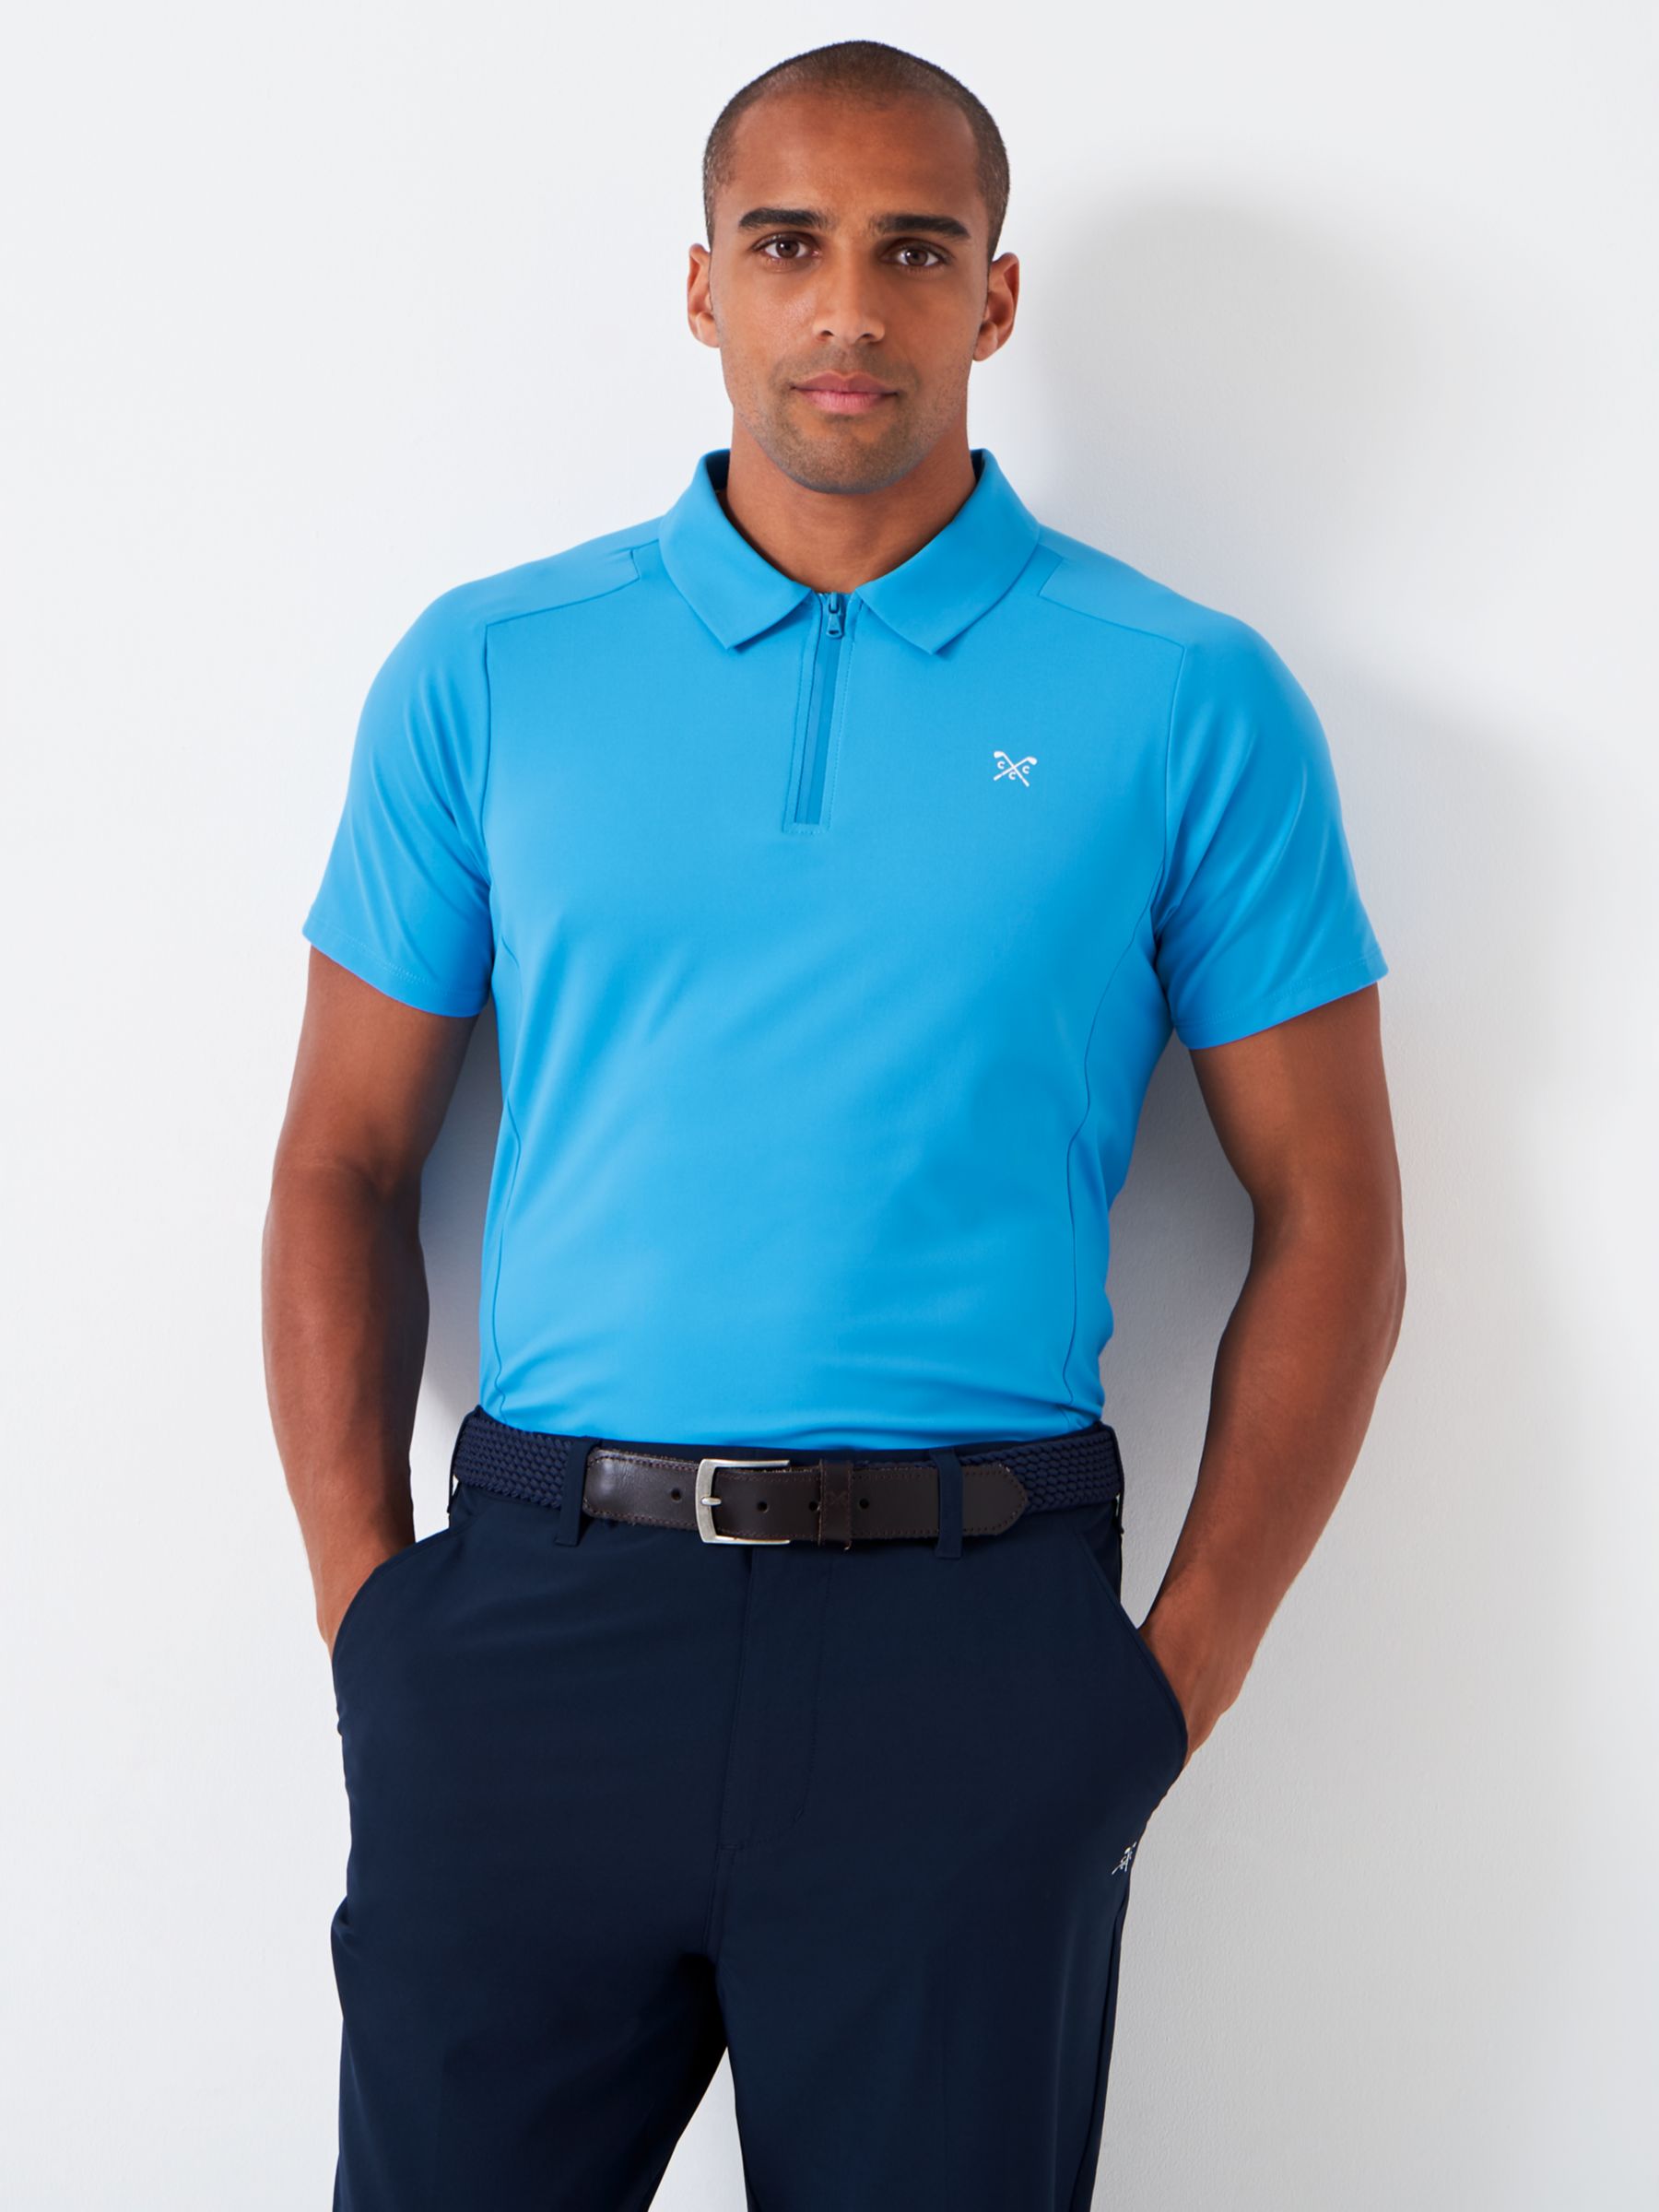 Рубашка-поло для гольфа Champion Crew Clothing, синий рубашка поло для гольфа из хлопка с кантом crew clothing светло розовый